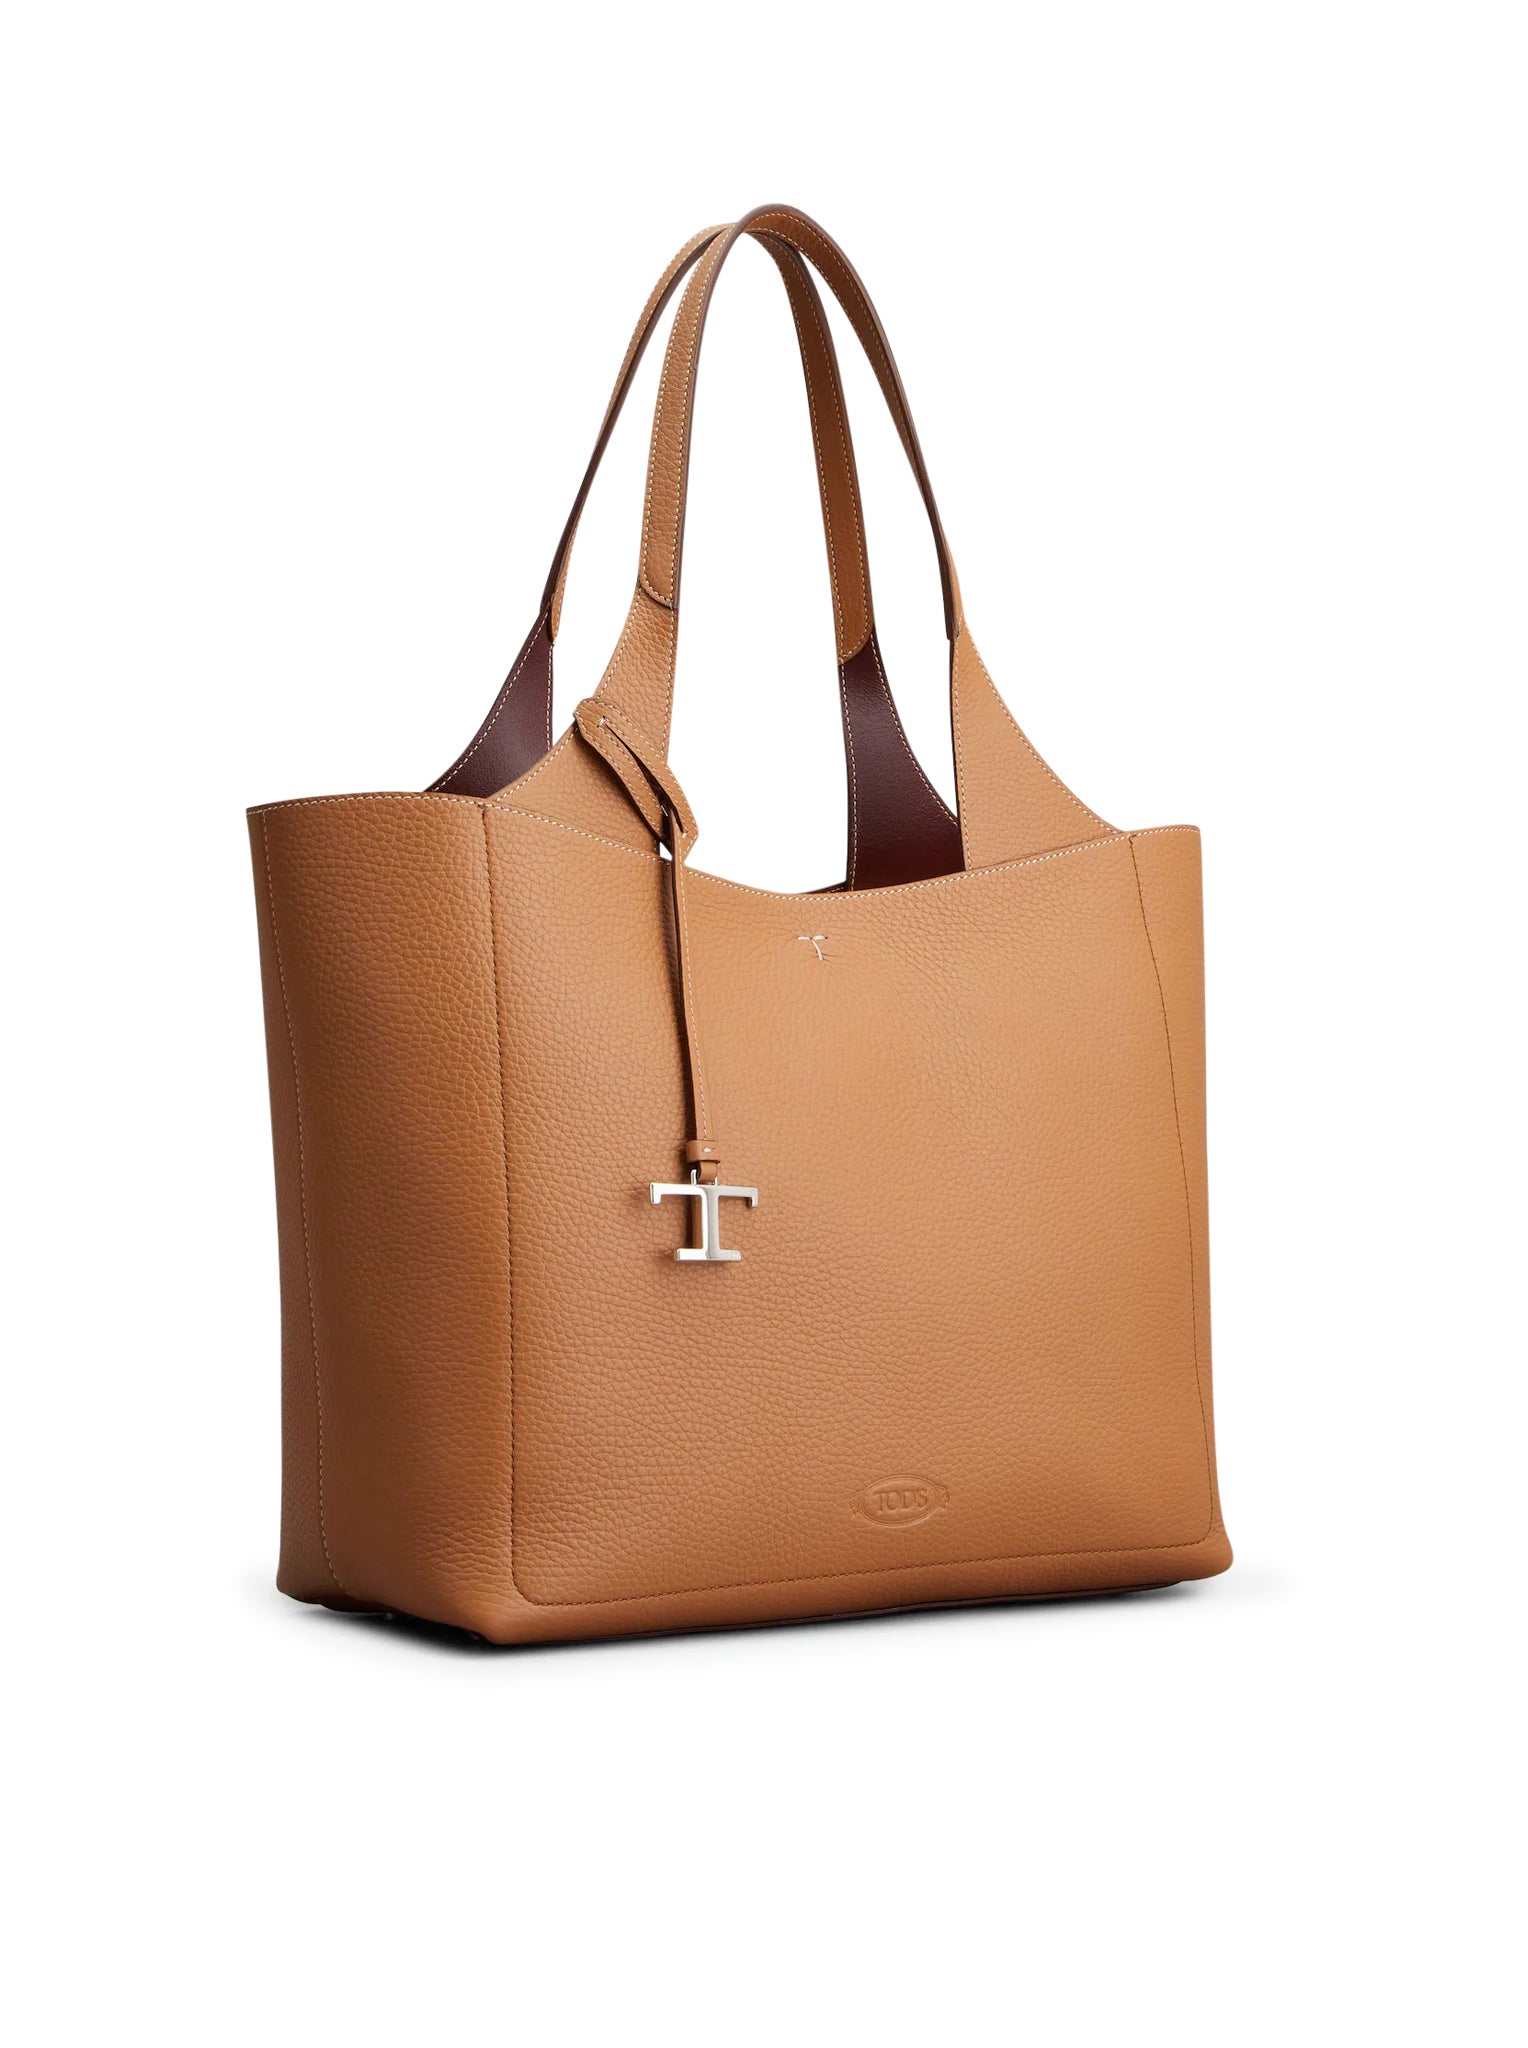 Medium Leather Shopping Bag